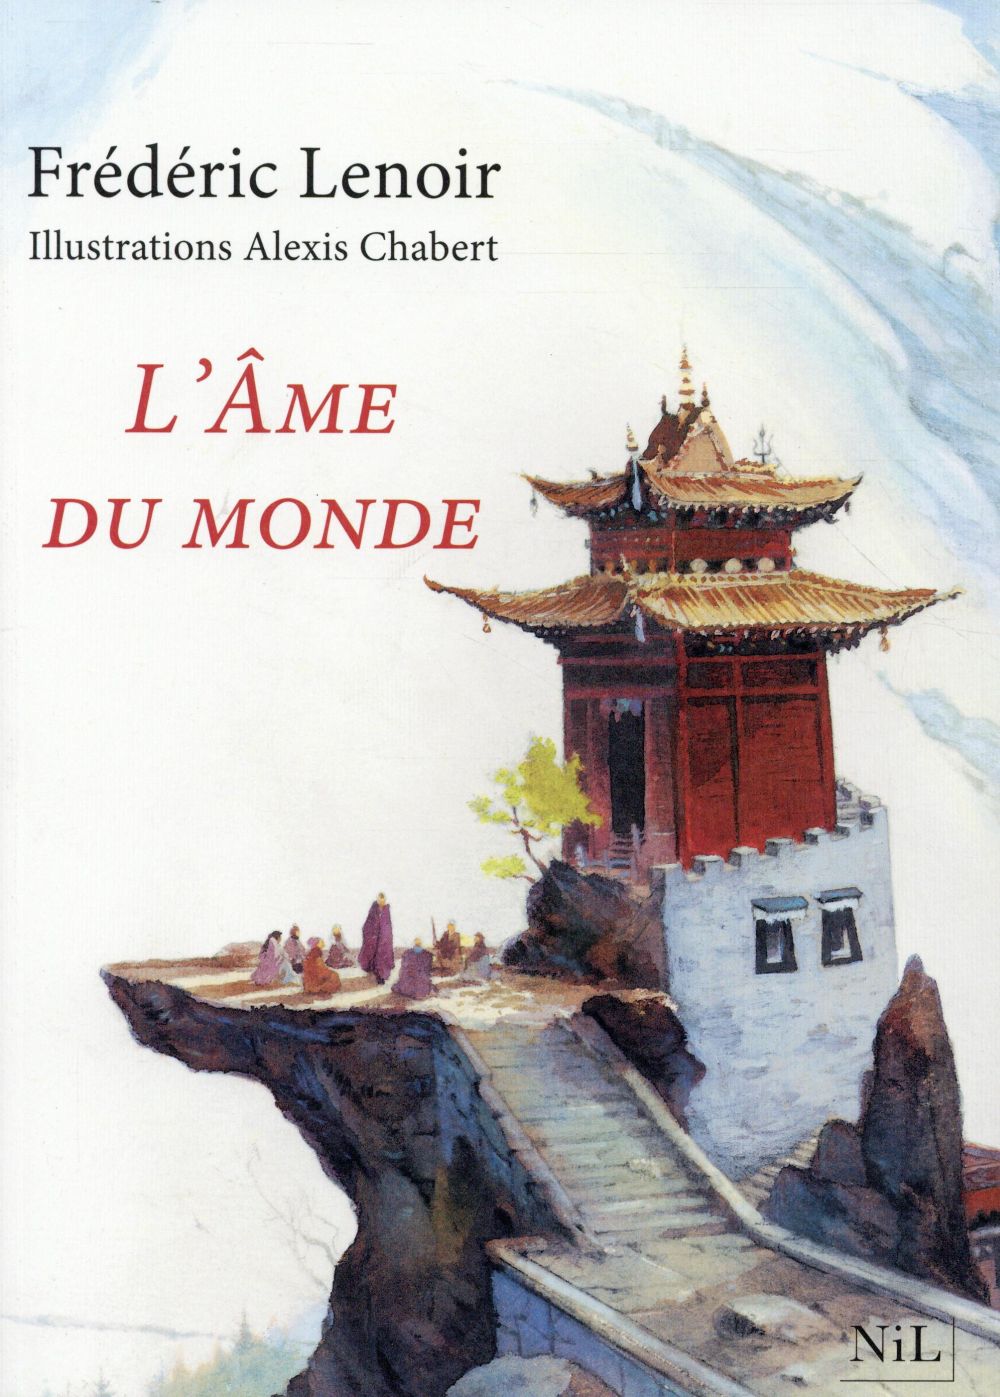 L'AME DU MONDE - EDITION ILLUSTREE -